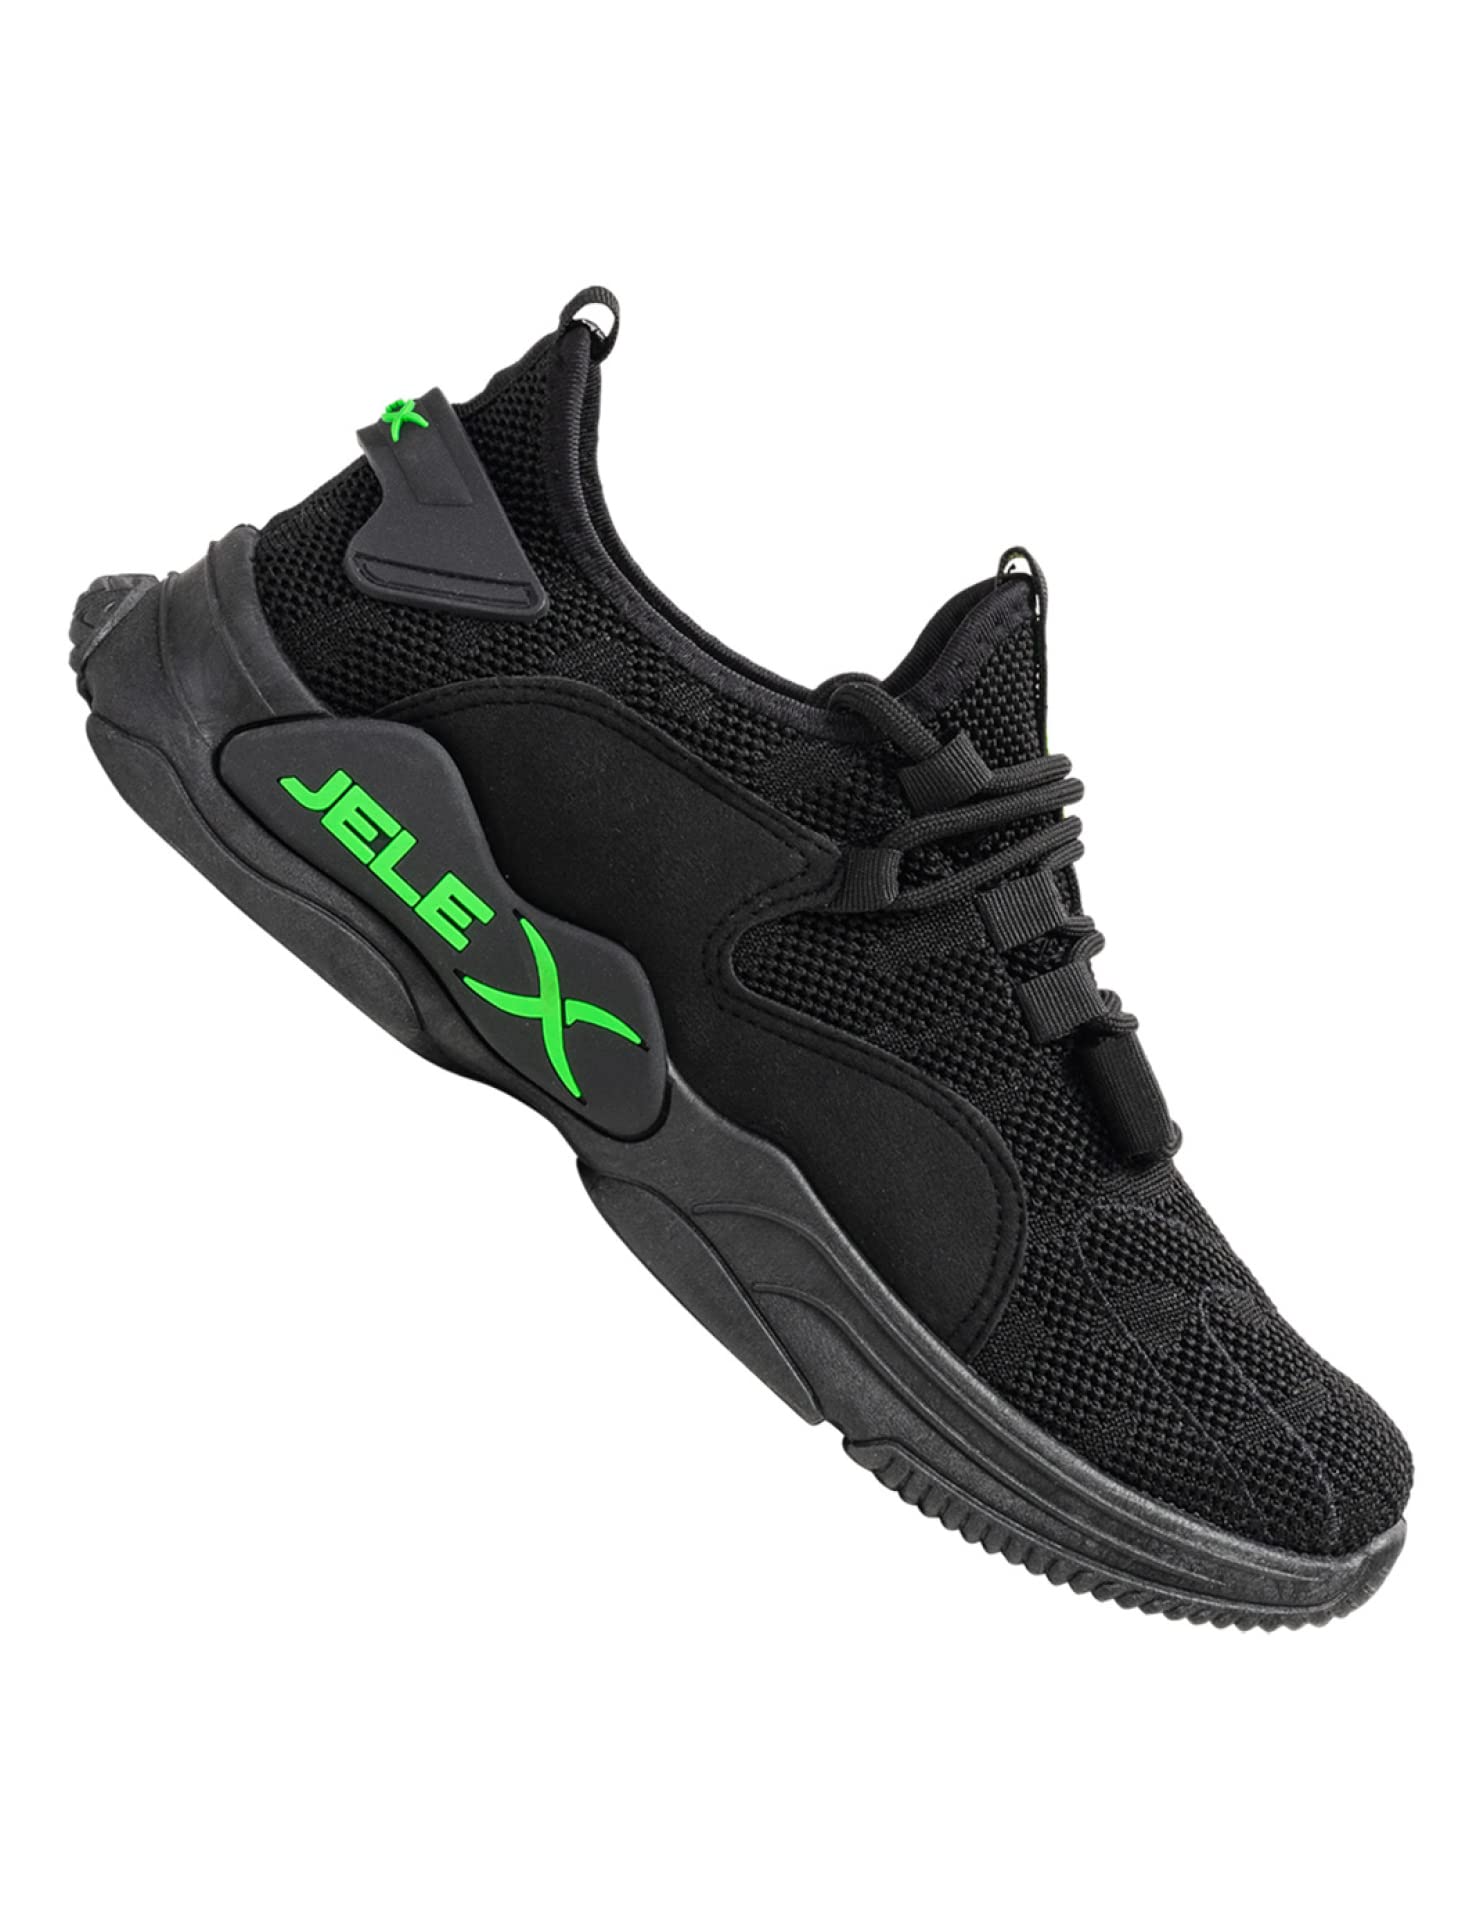 JELEX Performance Herren Sneaker in grau/schwarz. Atmungsaktive Sportschuhe mit Mesh-Obermaterial und Rutschfester Sohle. (eu_Footwear_Size_System, Adult, Numeric, medium, Numeric_46)